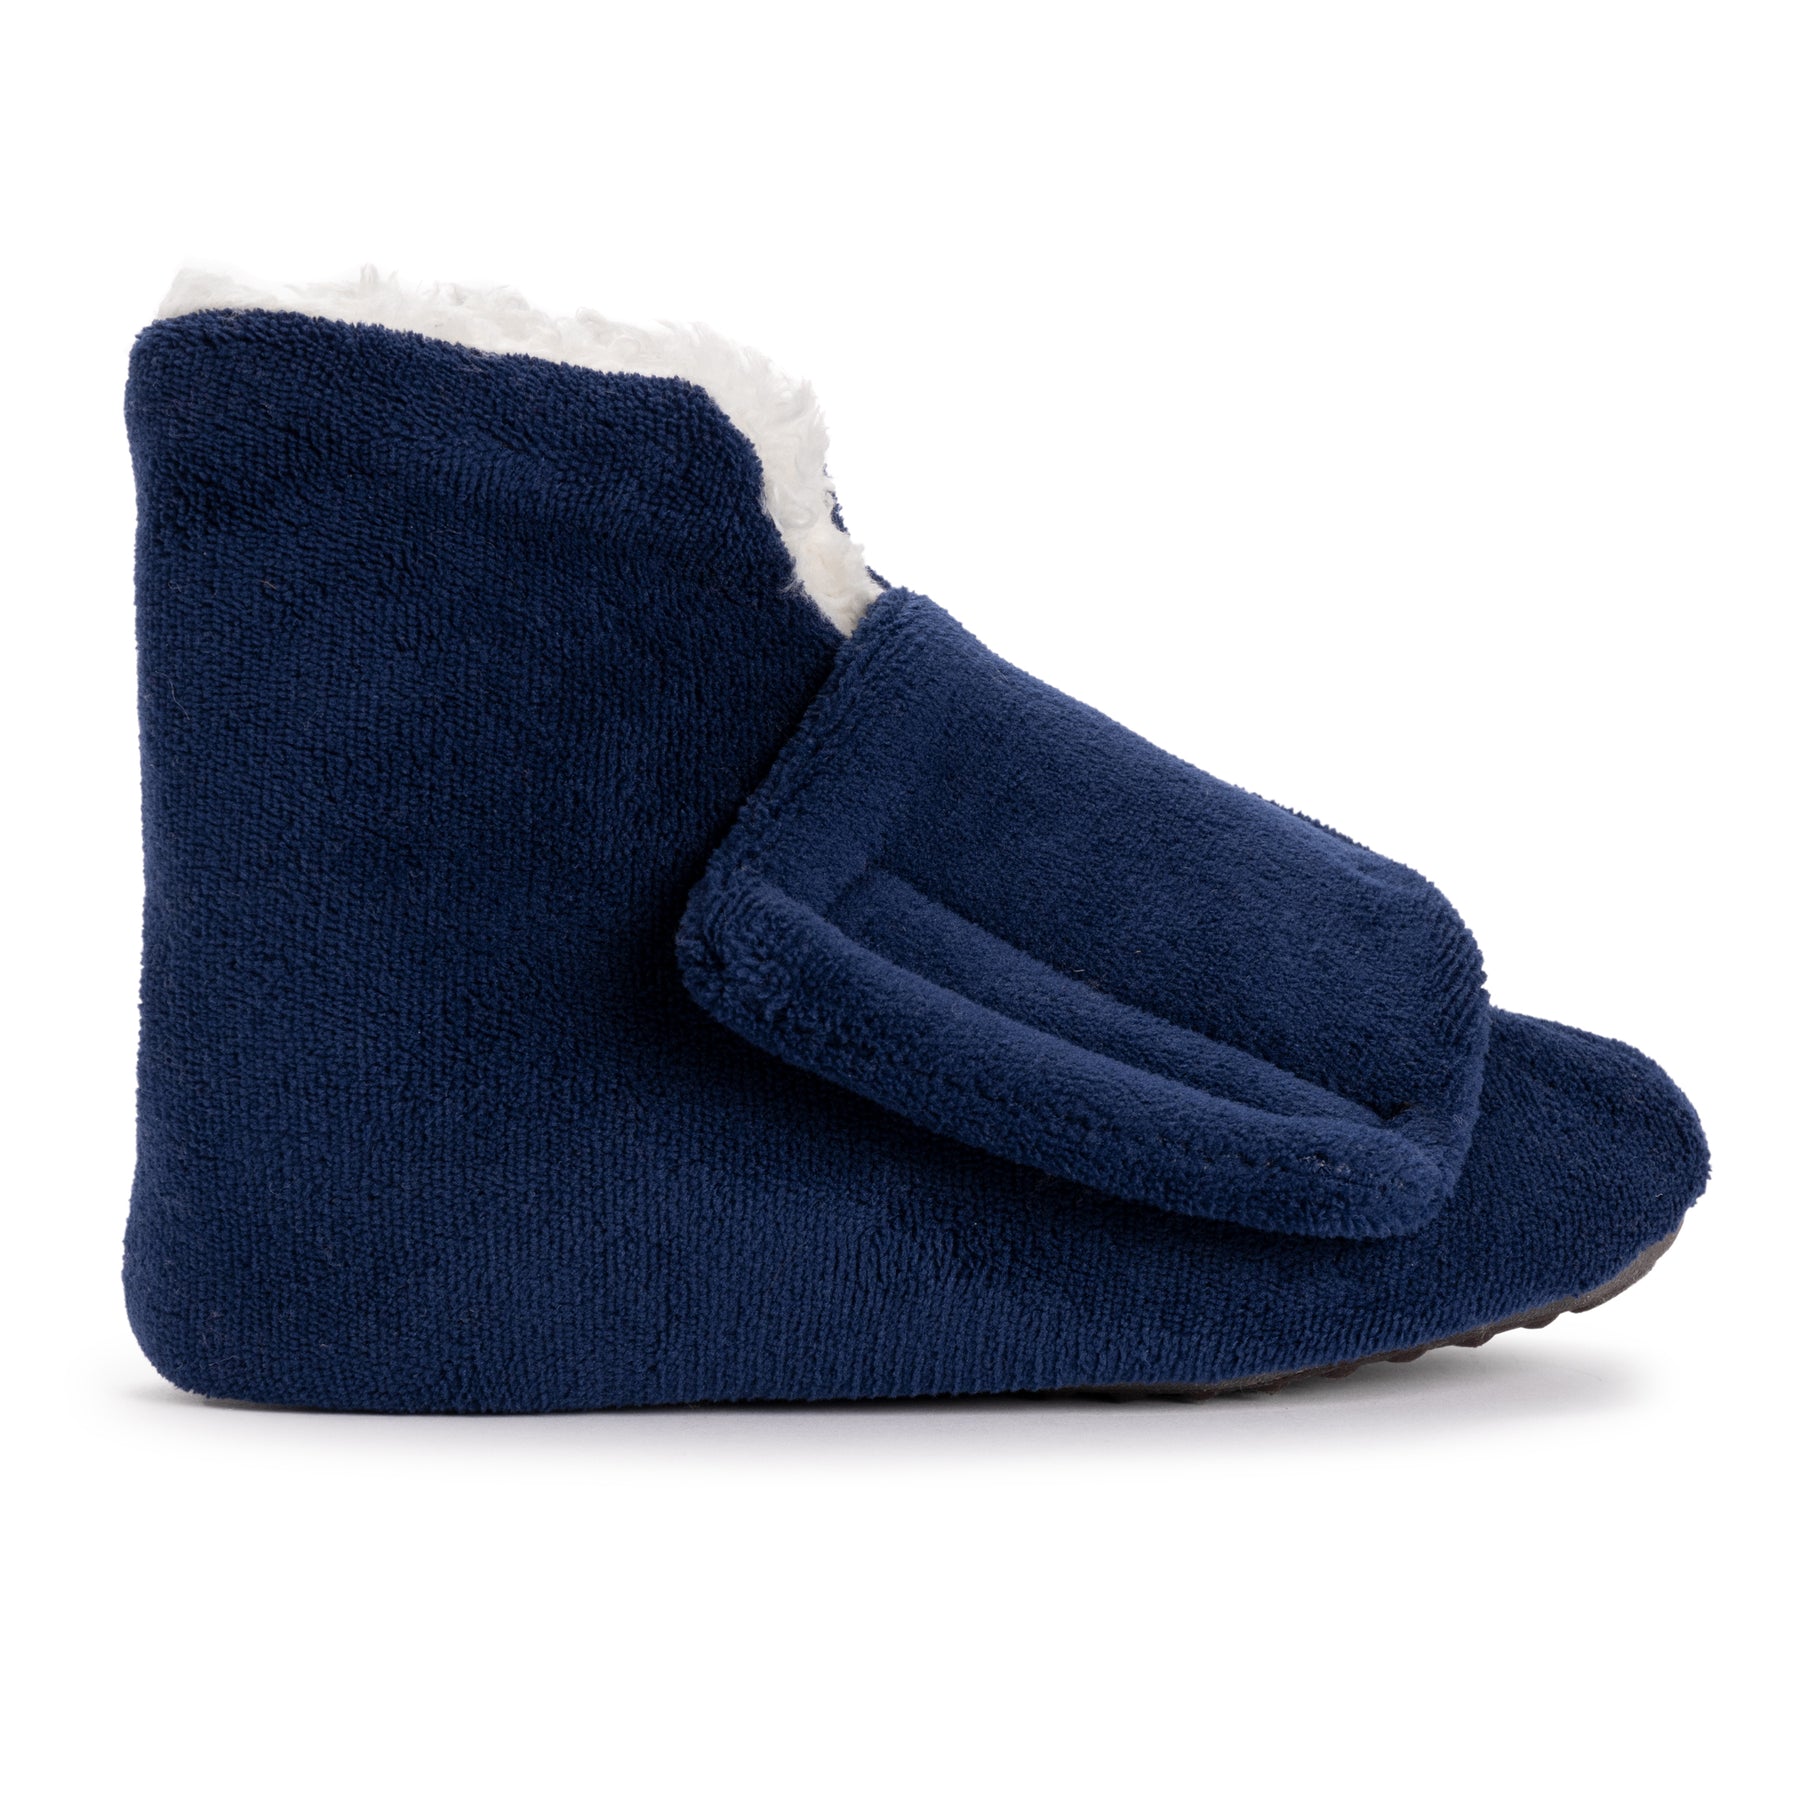 Muk Luks Women's Bootie Slippers, Blue, Small/Medium 